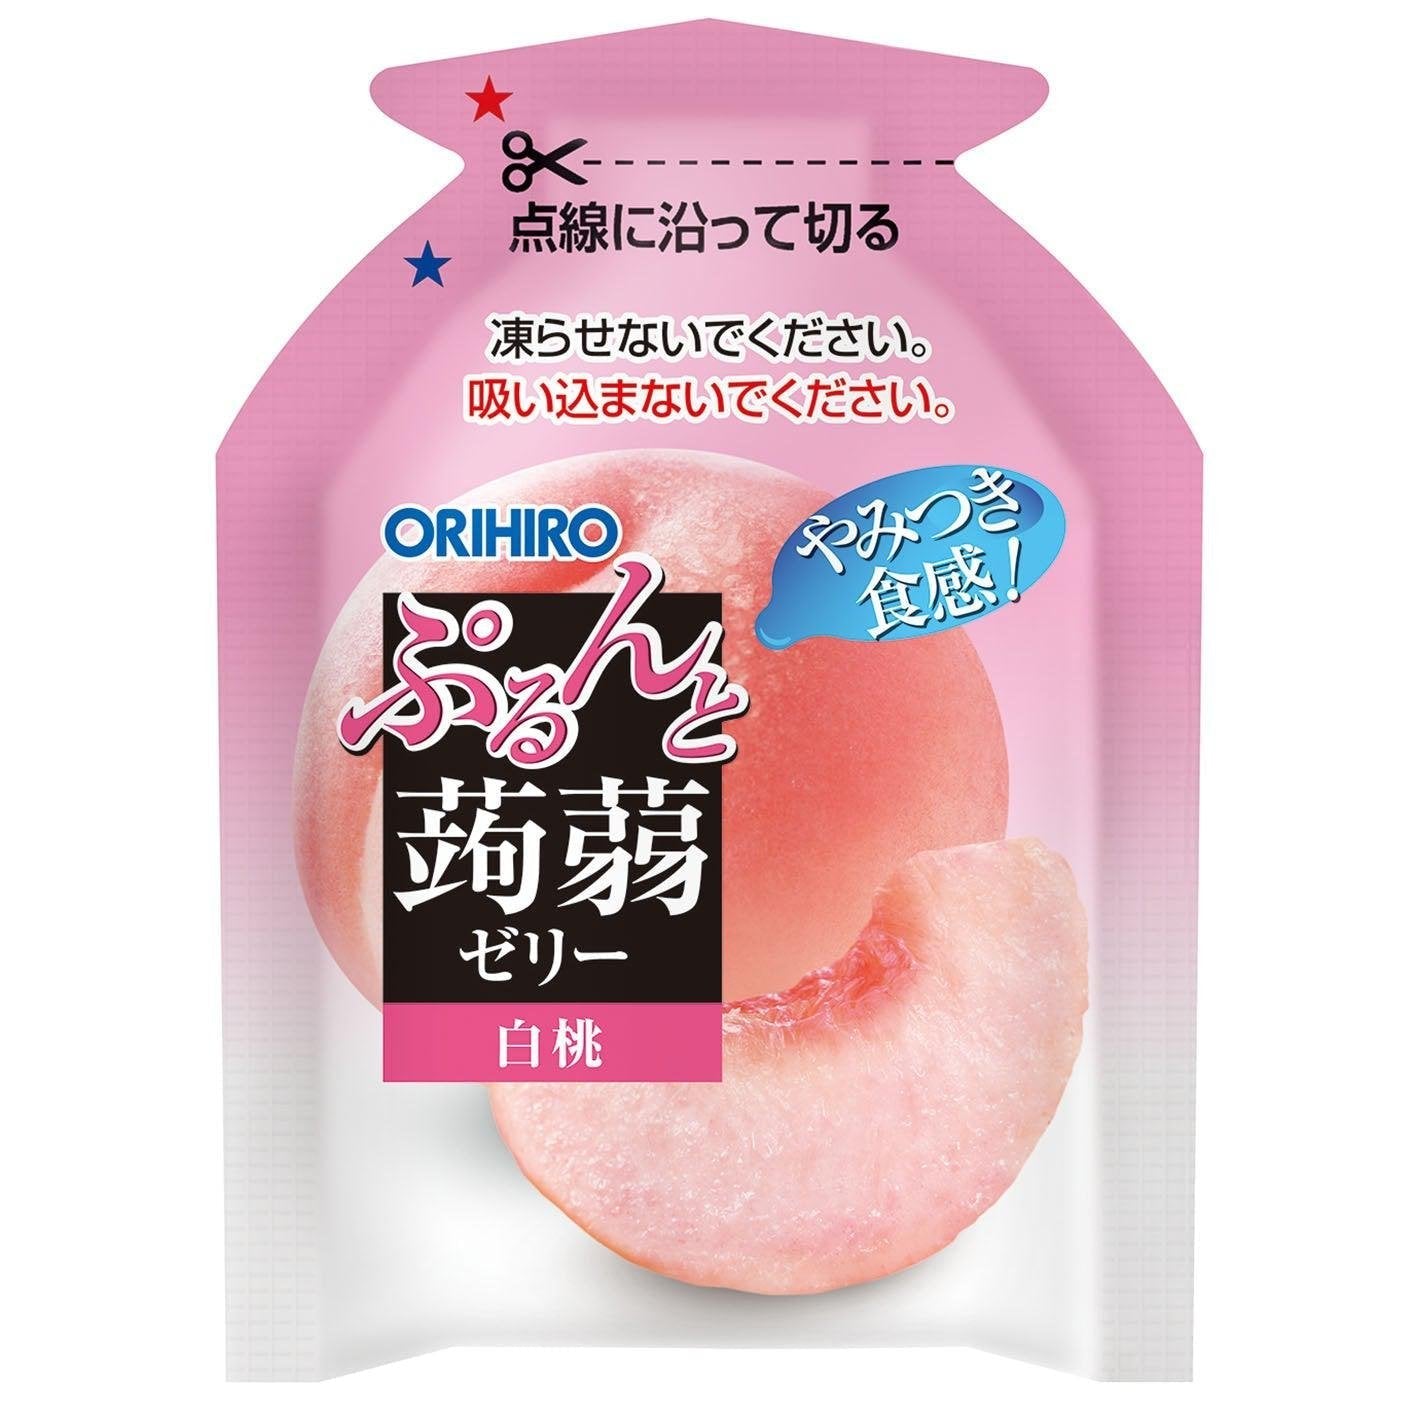 Orihiro Konjac Jelly Snack Peach Flavor 120g